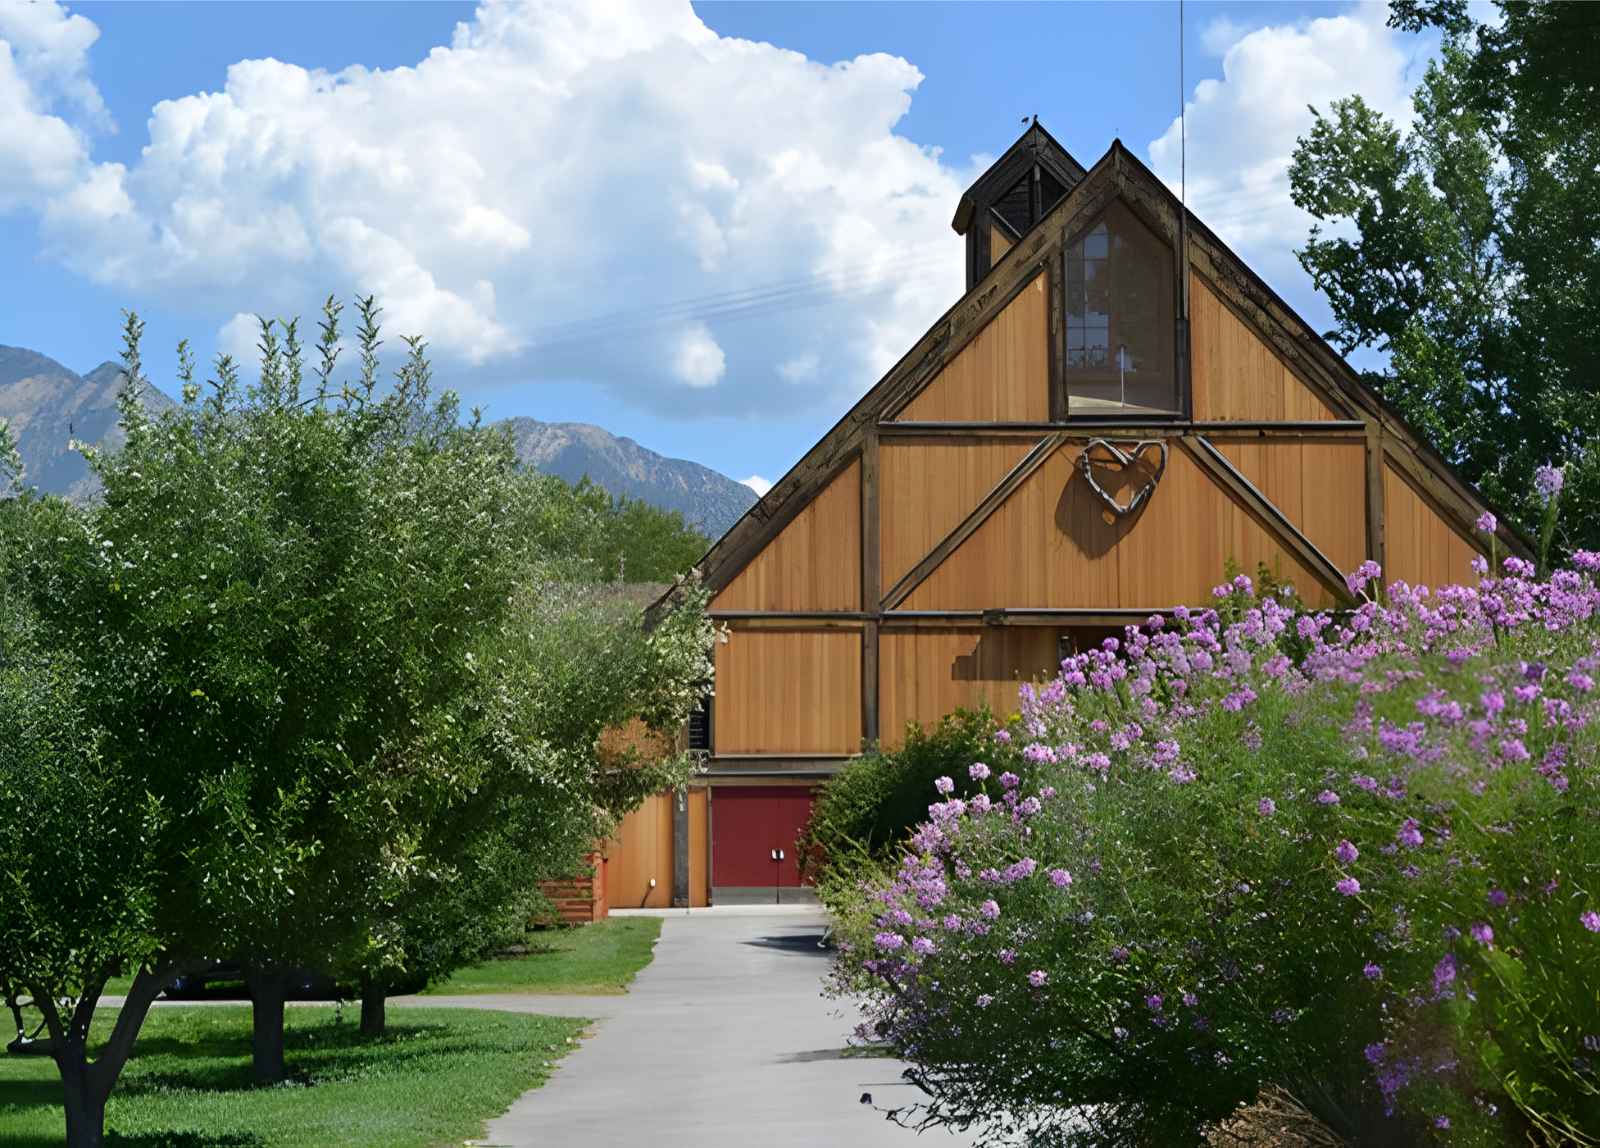 Things to do in Salt Lake City - Wheeler Historic Farm